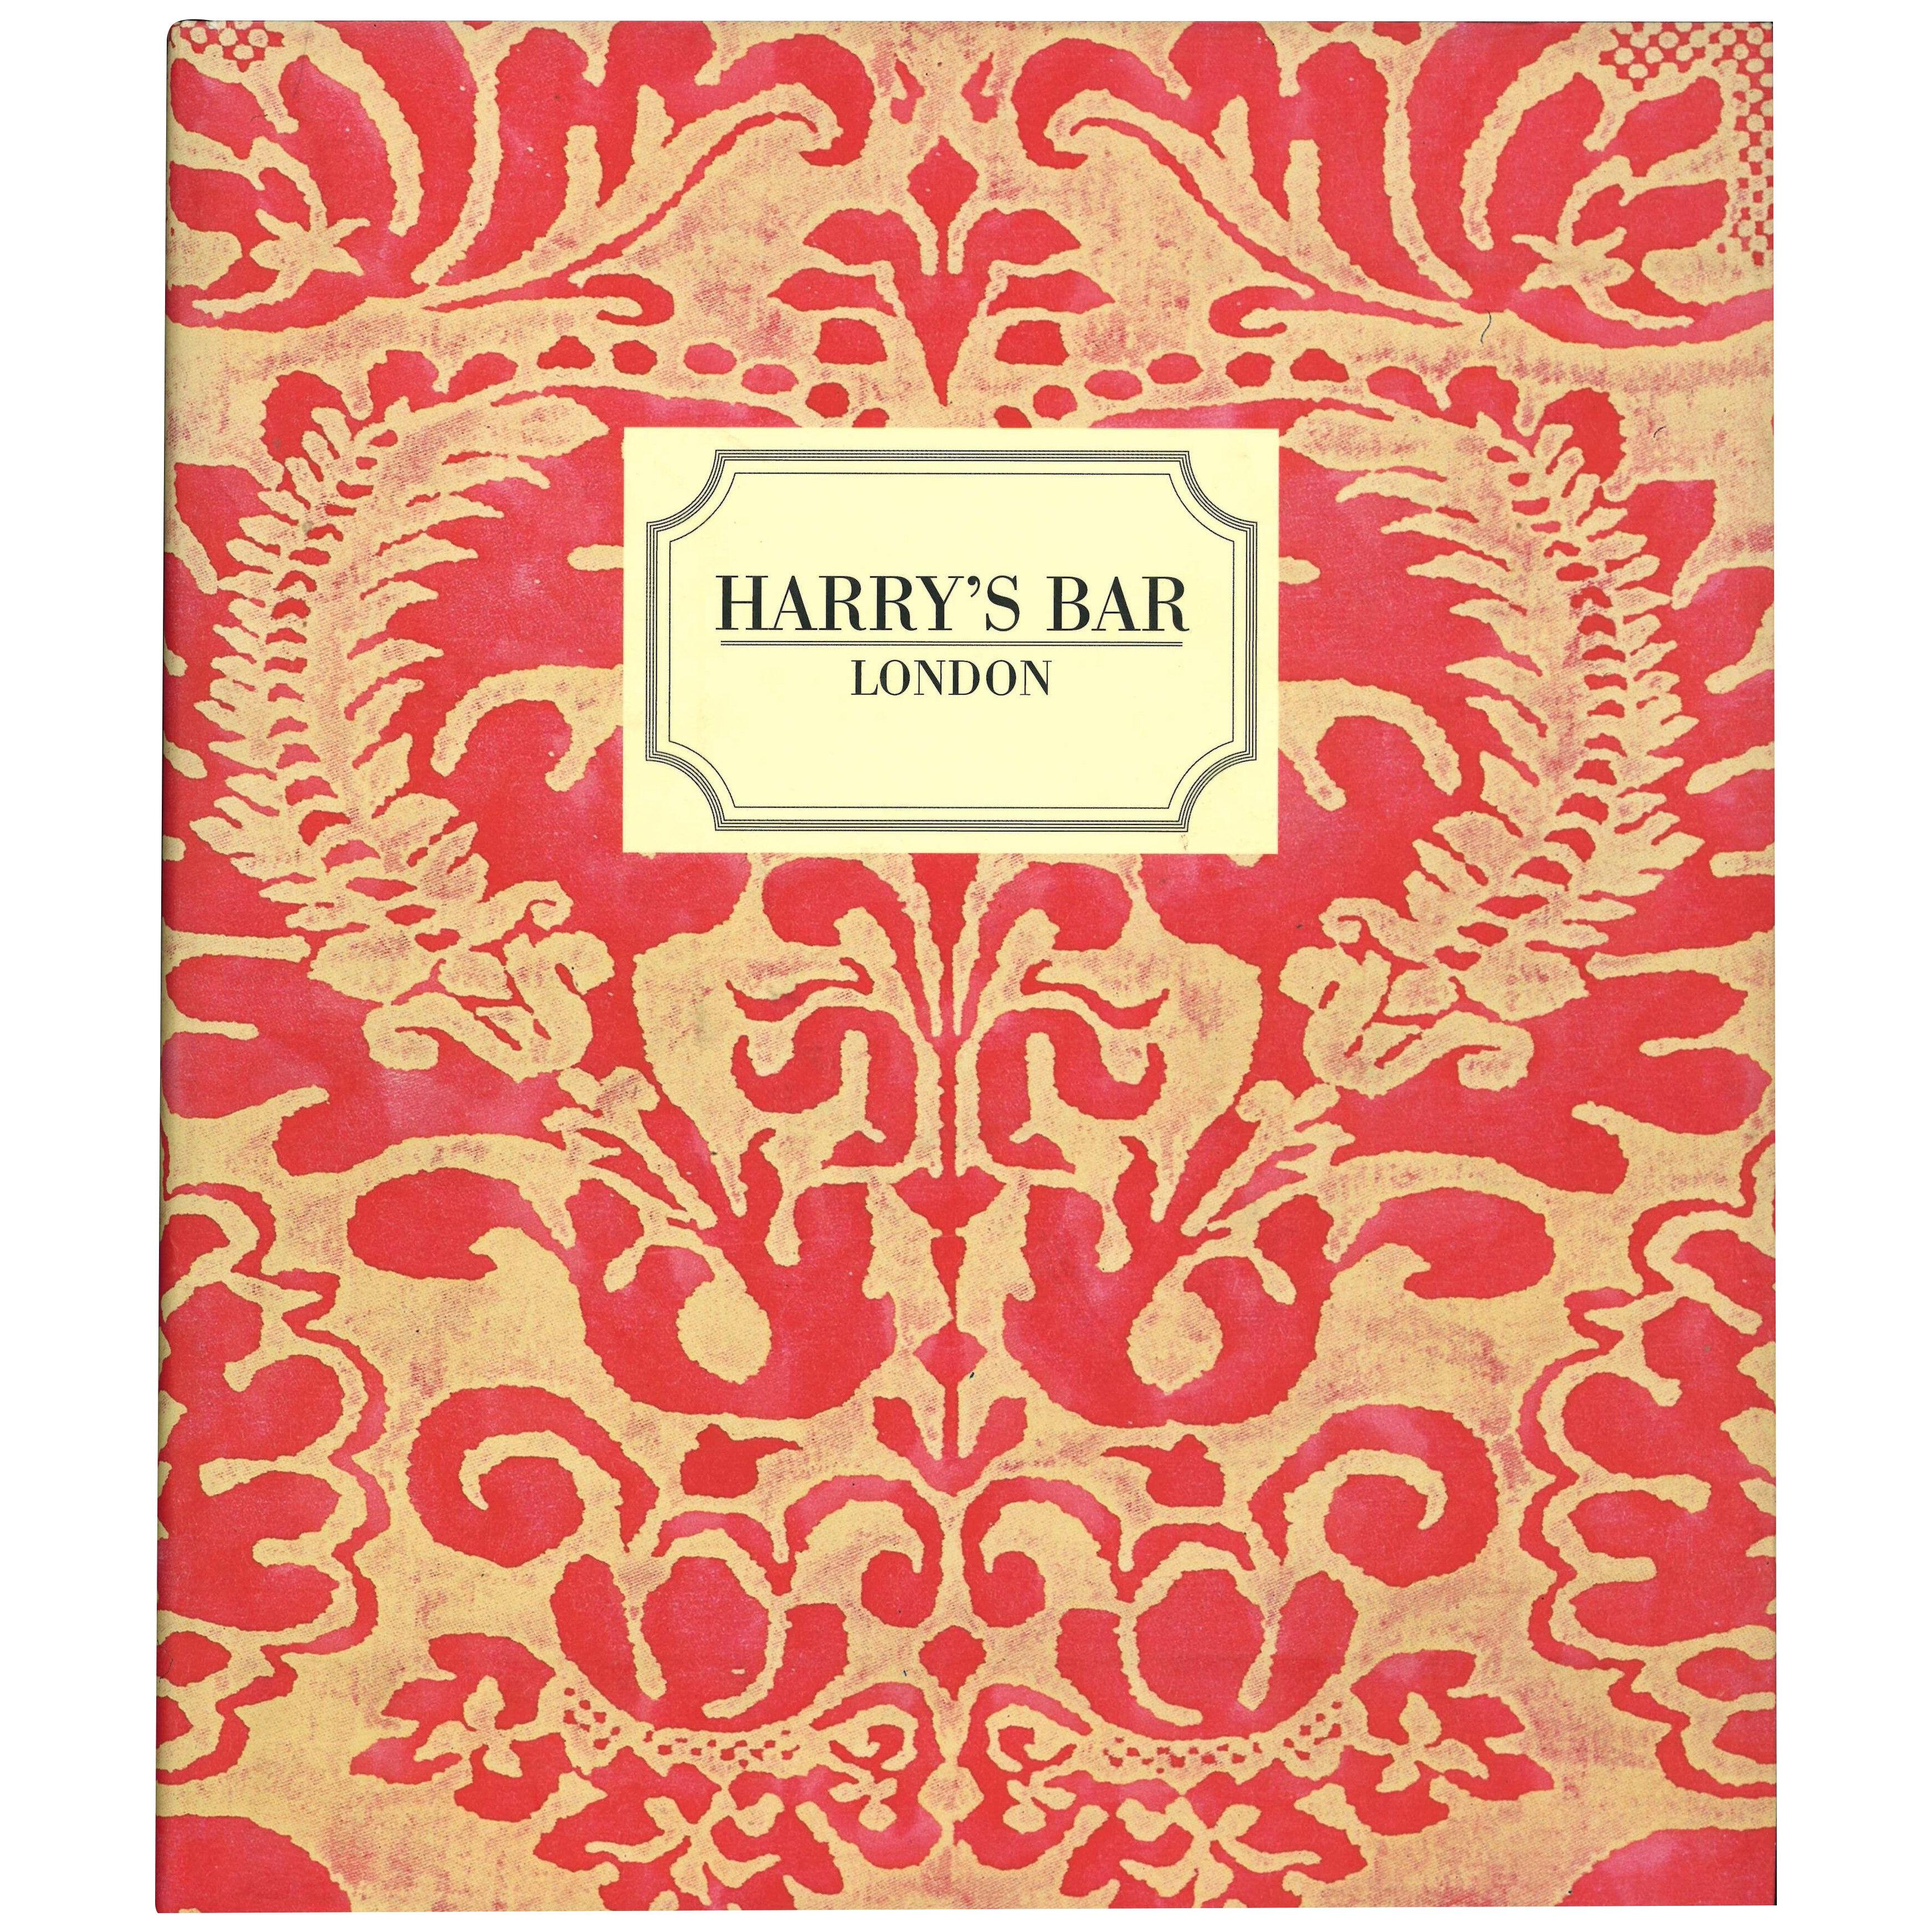 HARRY'S BAR- London. Book